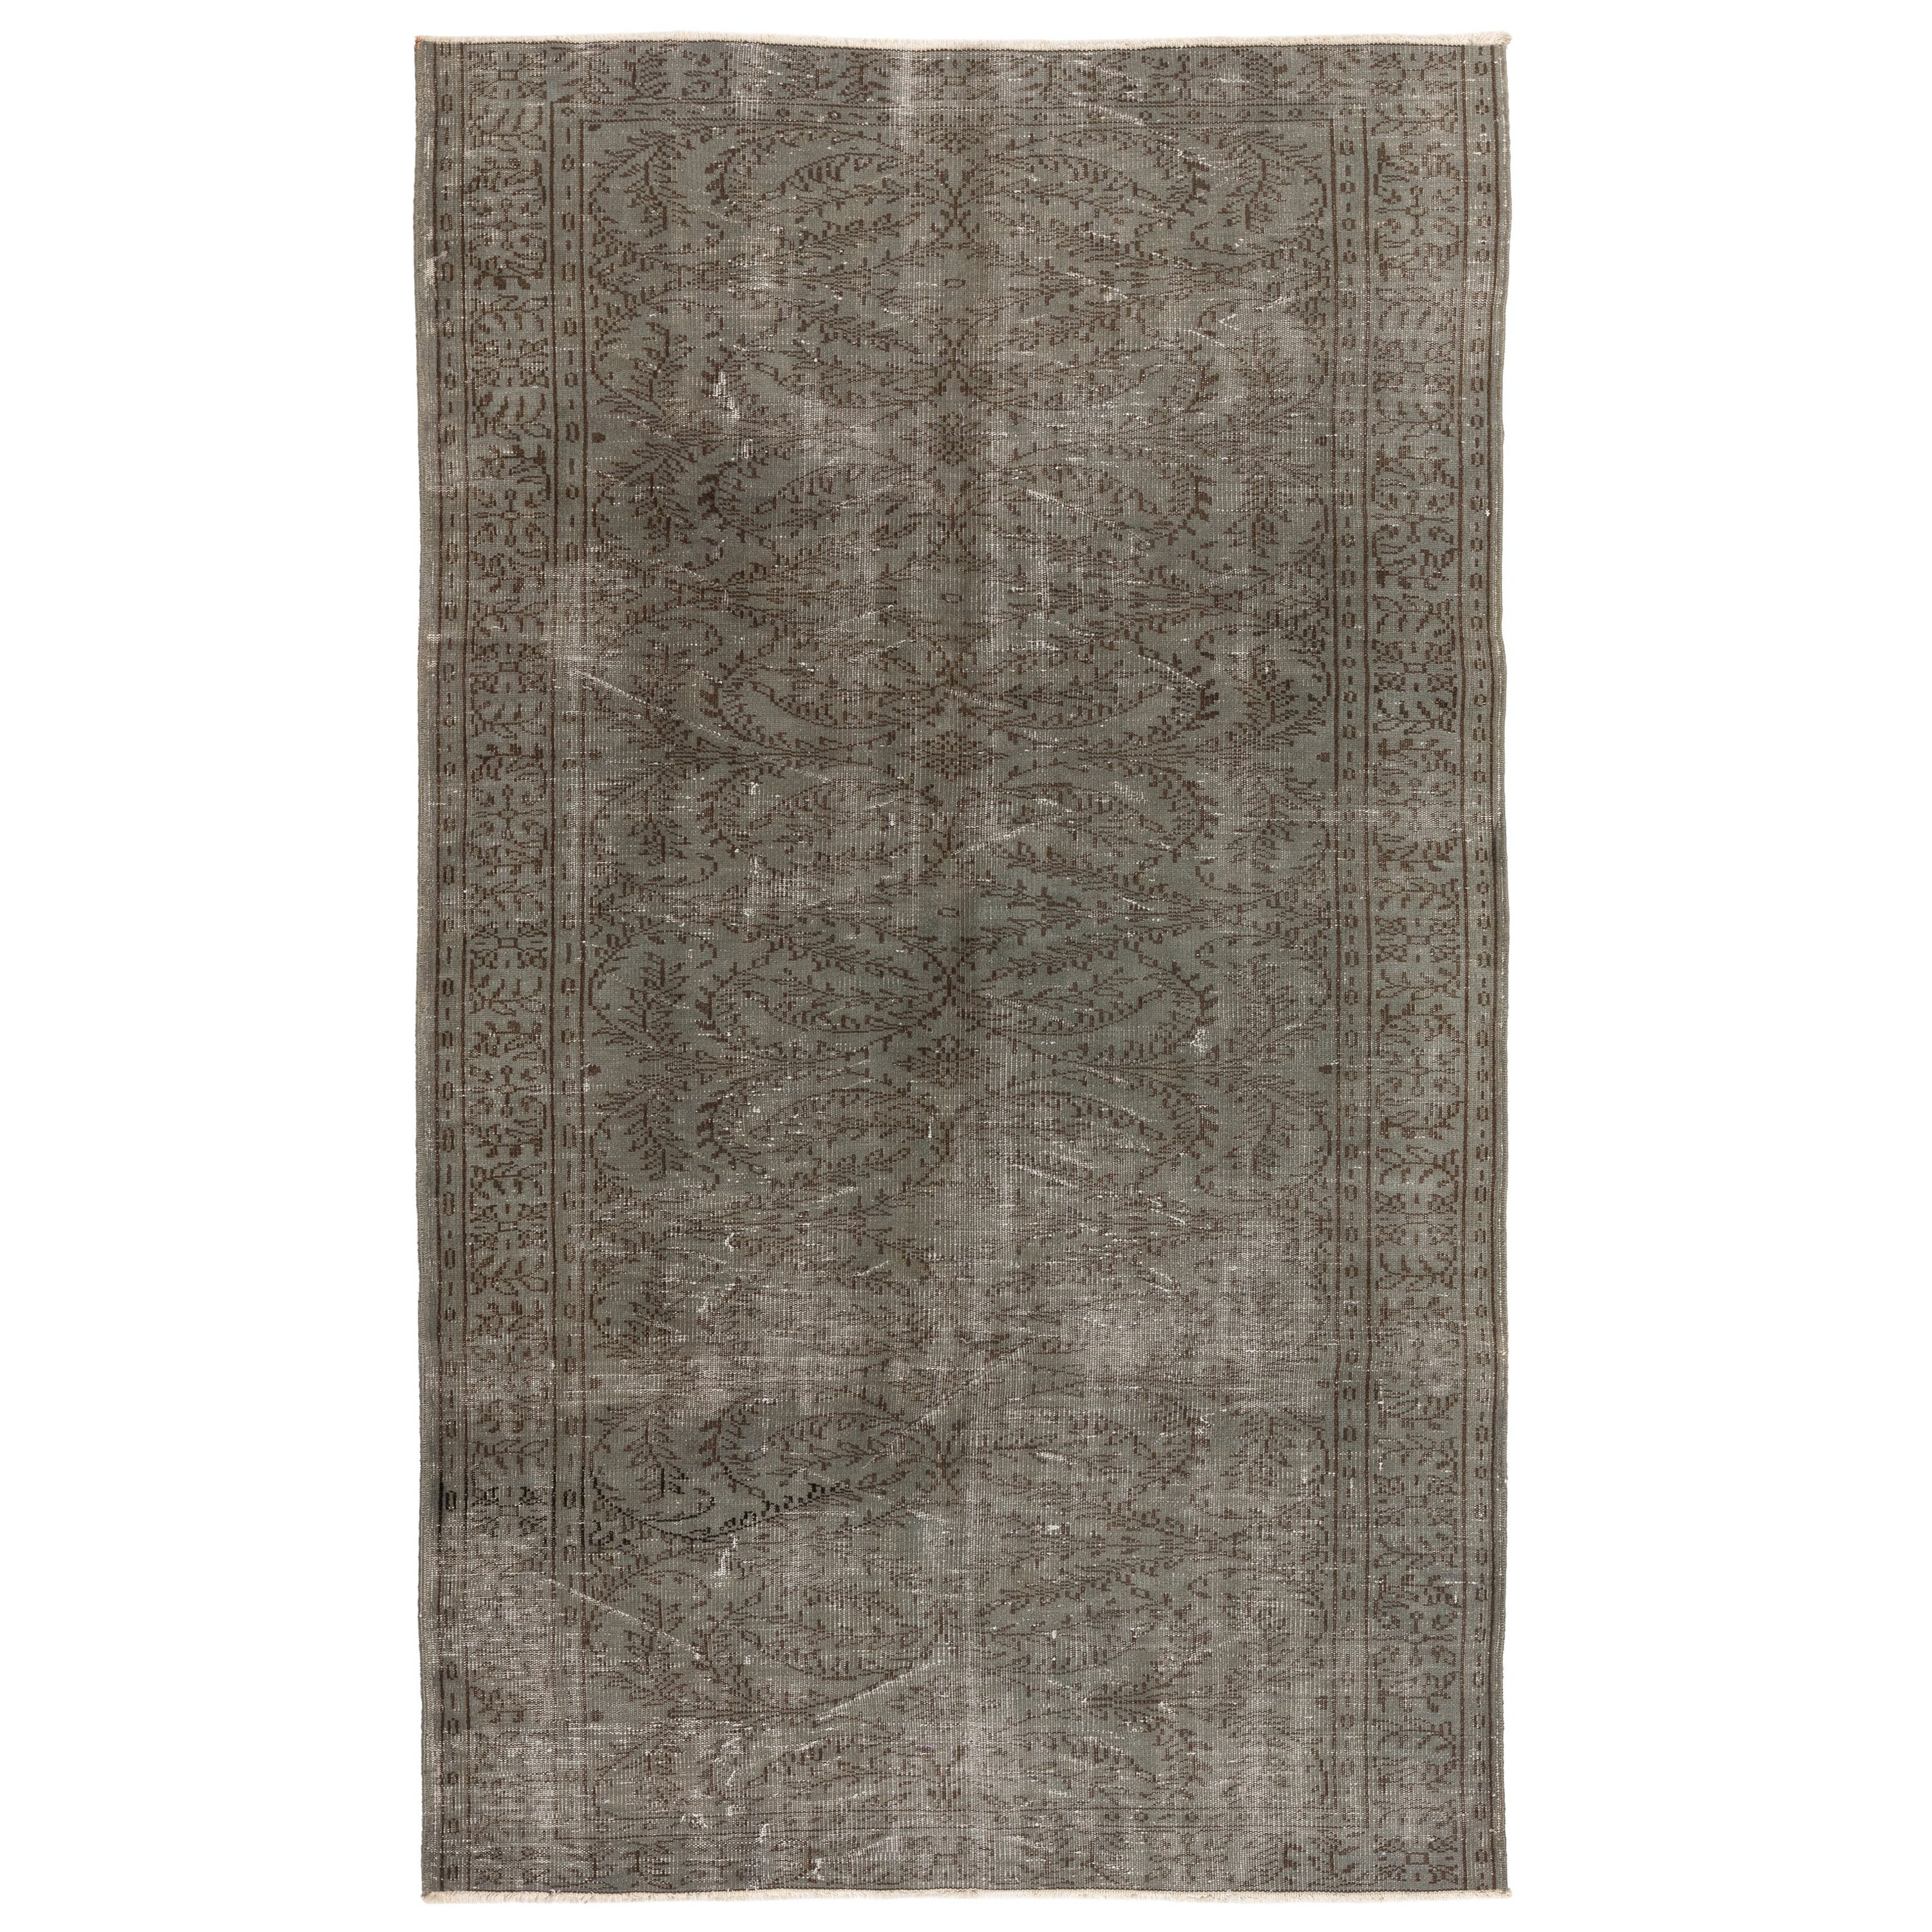 Midcentury Handmade Turkish Wool Area Rug in Gray for Modern Interiors